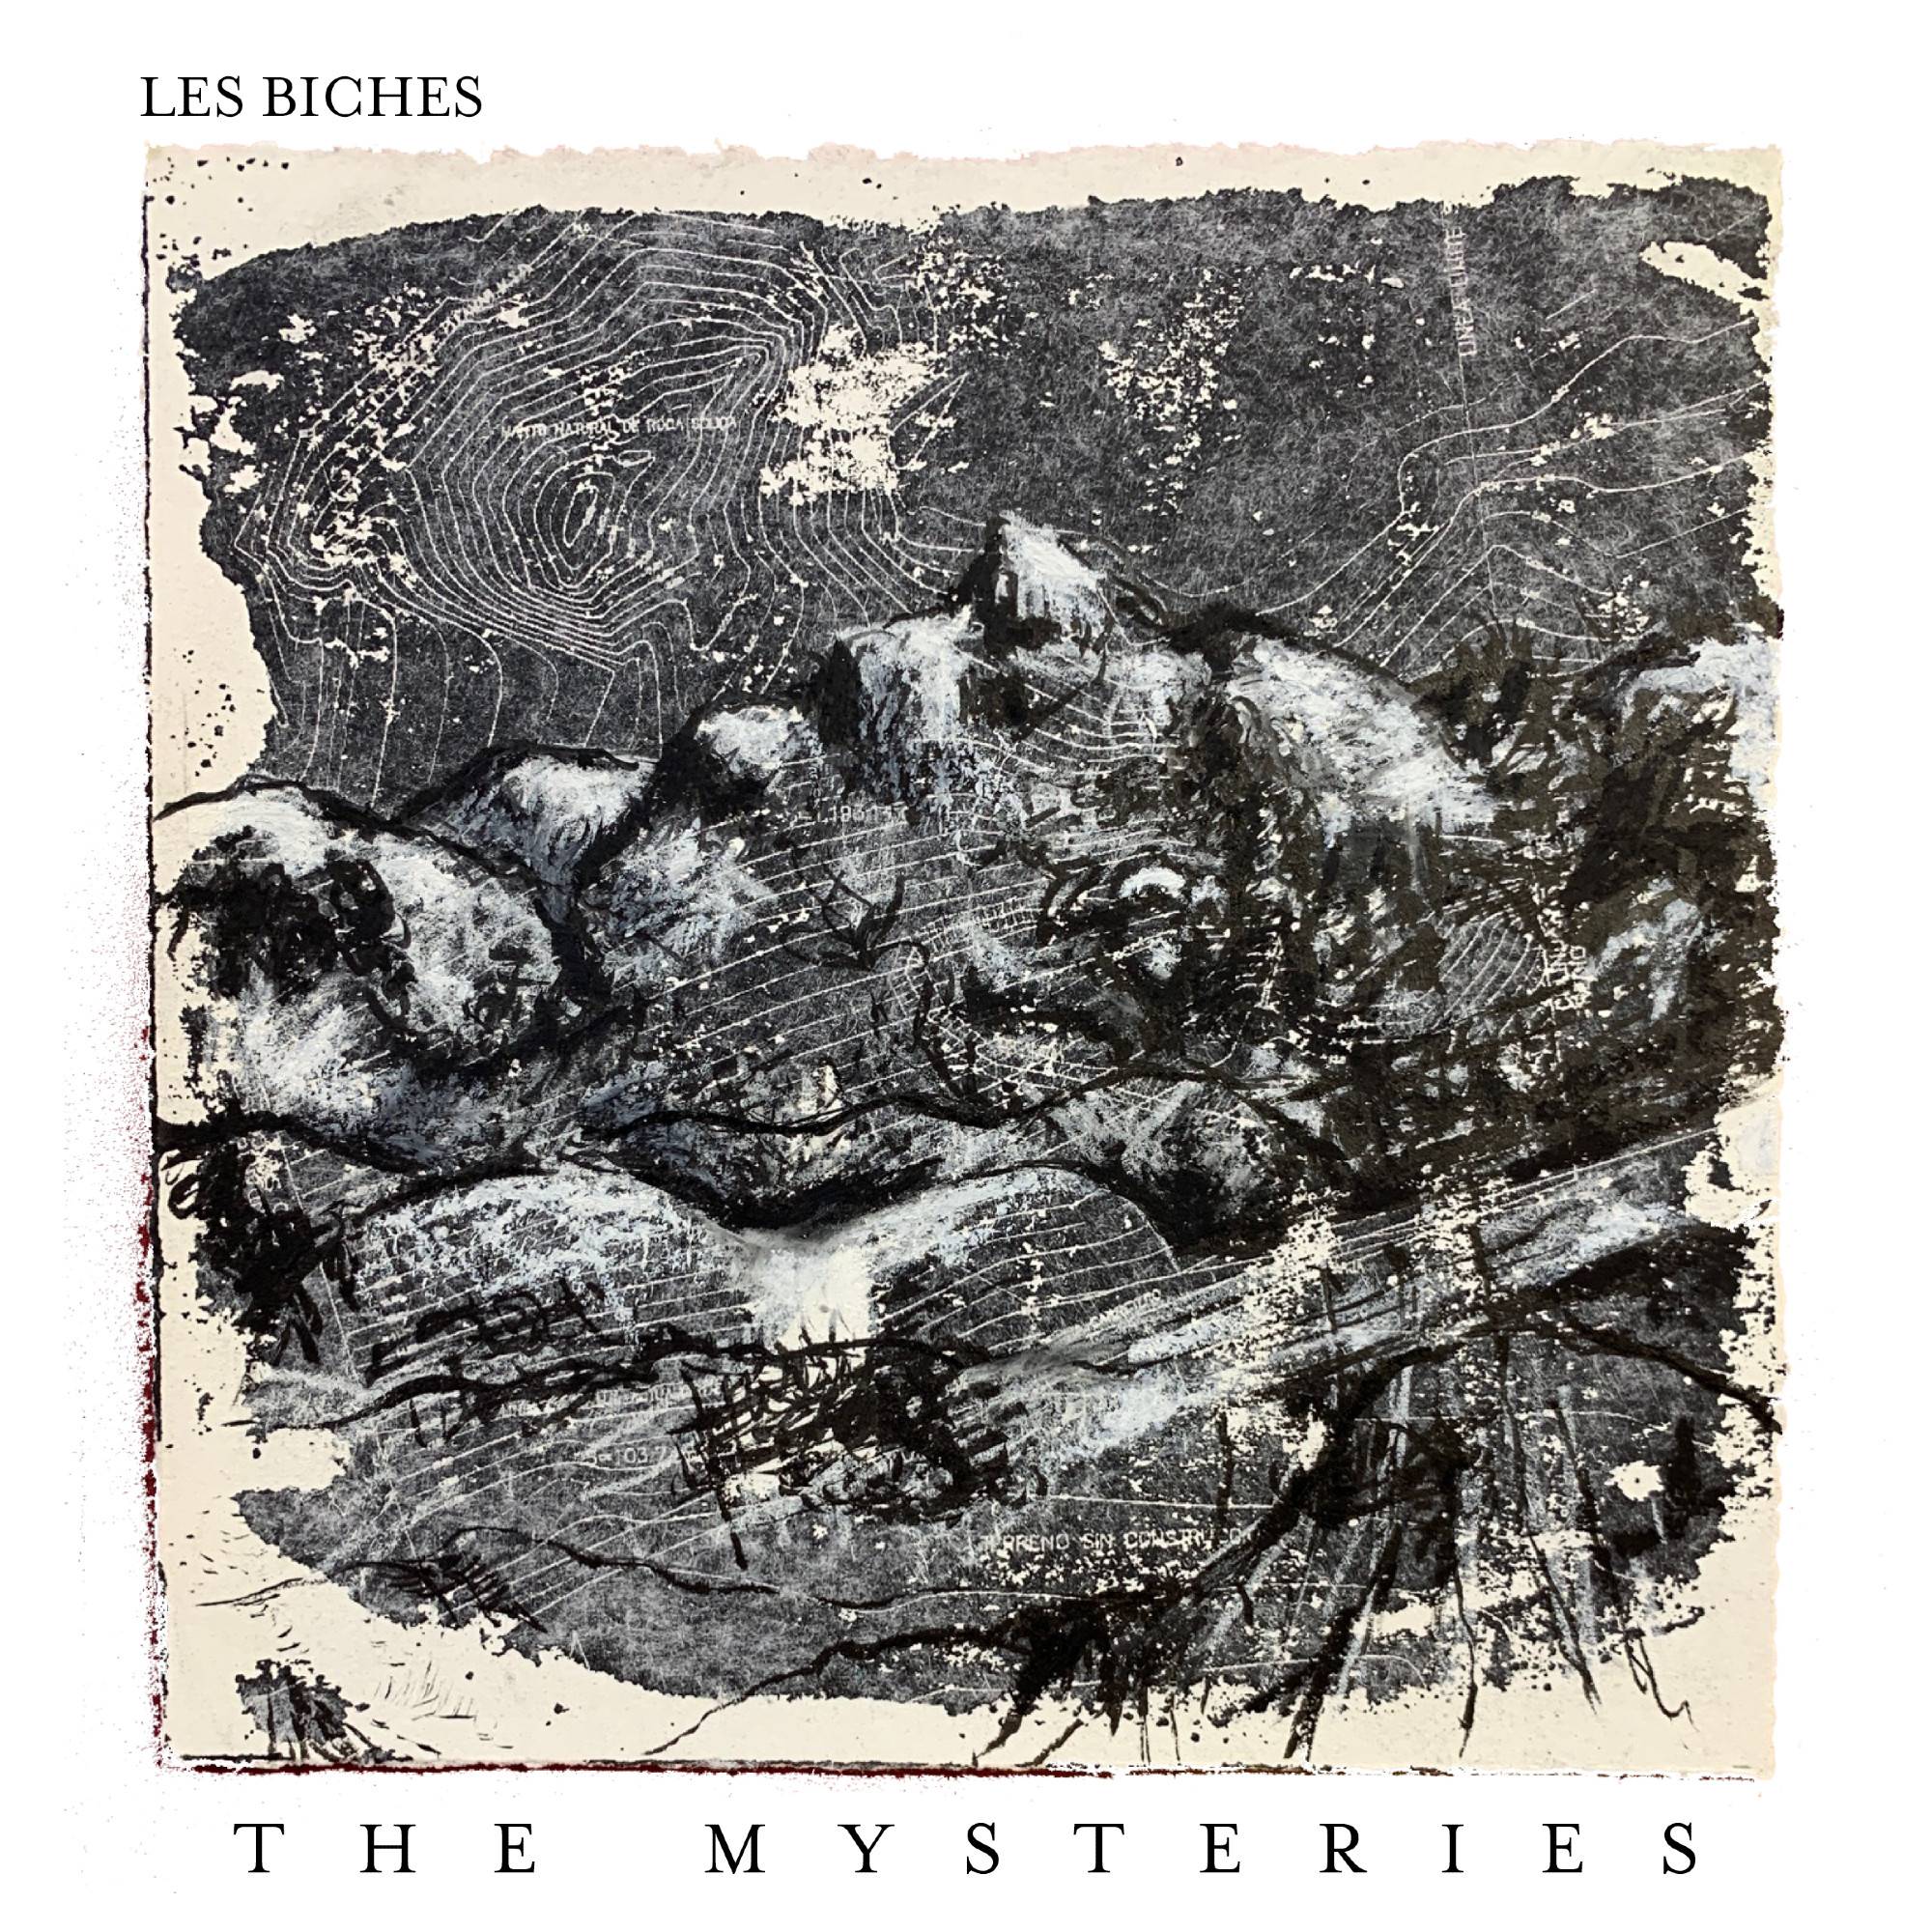 Les Biches ‘The Mysteries’ album artwork